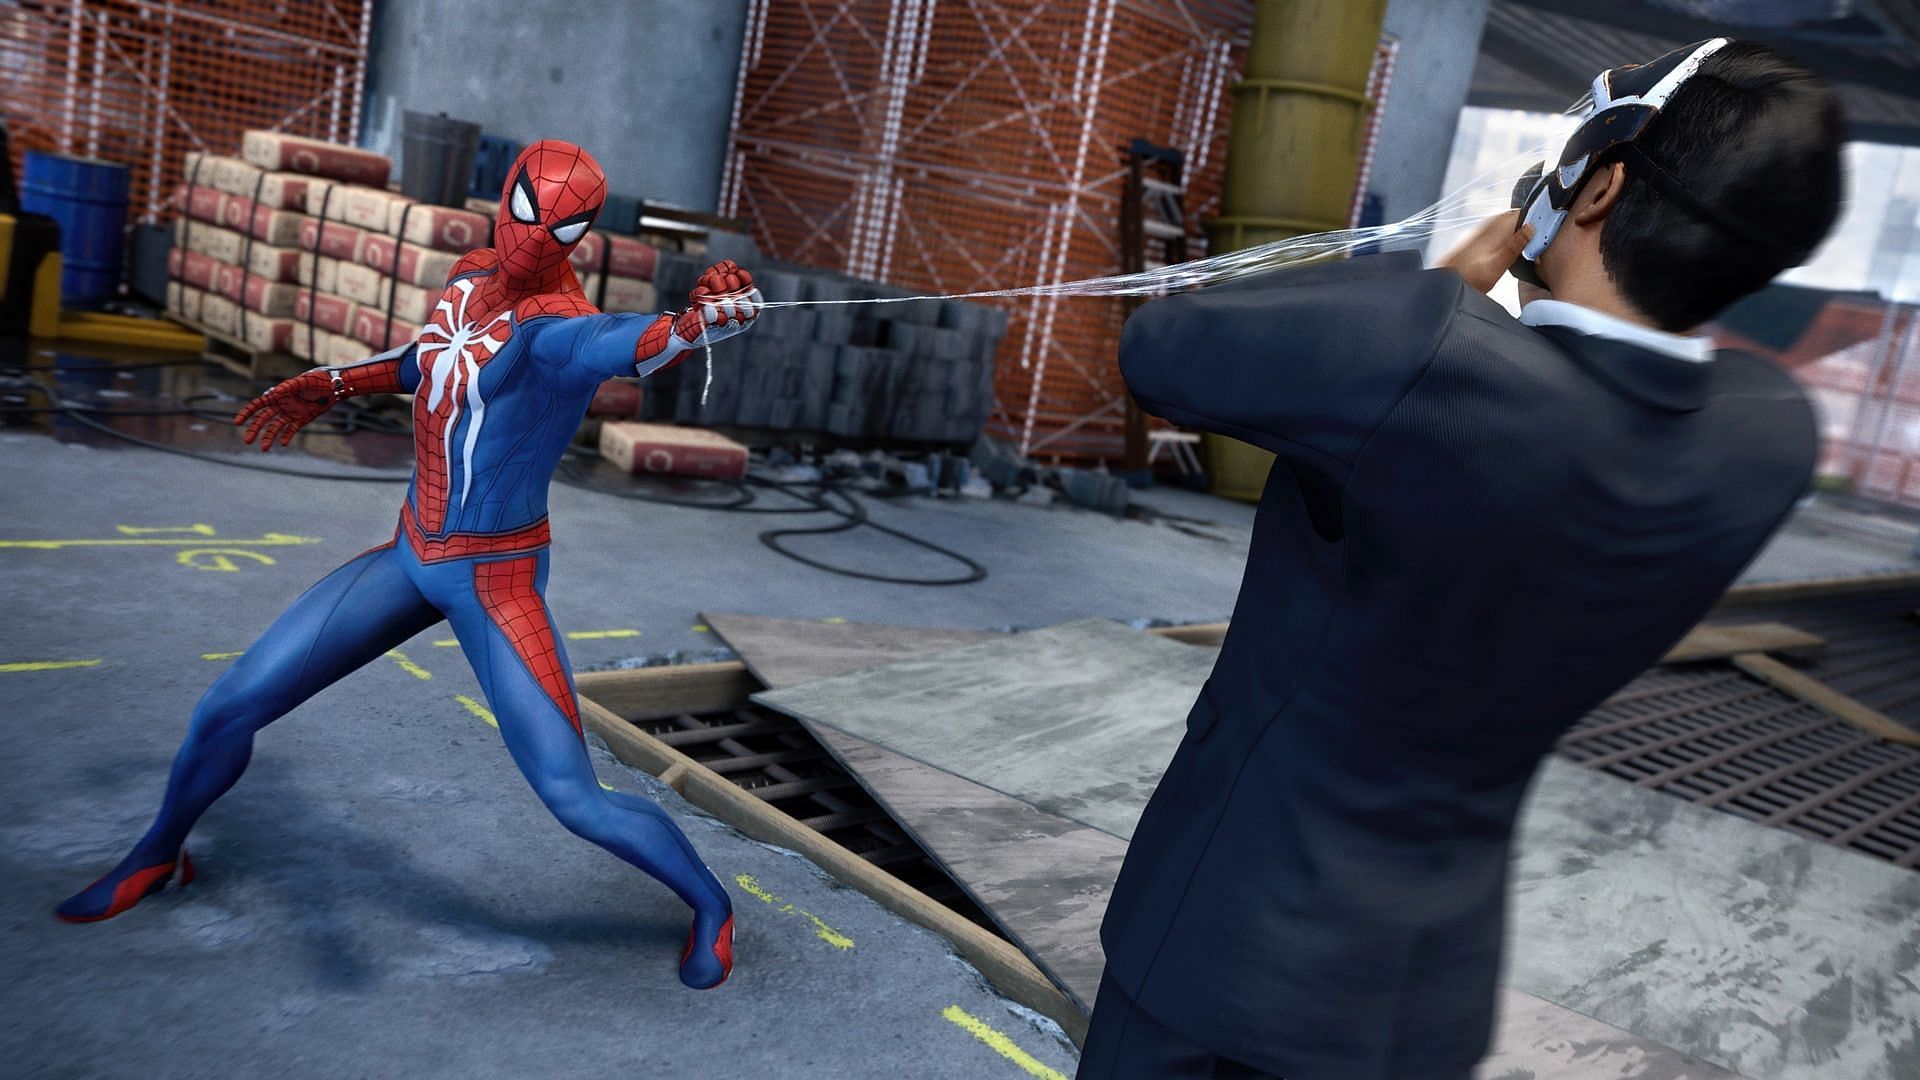 Spider-Man attacking an Inner Demon in Marvel's Spider-Man (Image Credit: Insomniac Games/Marvel/PlaySation Studios)